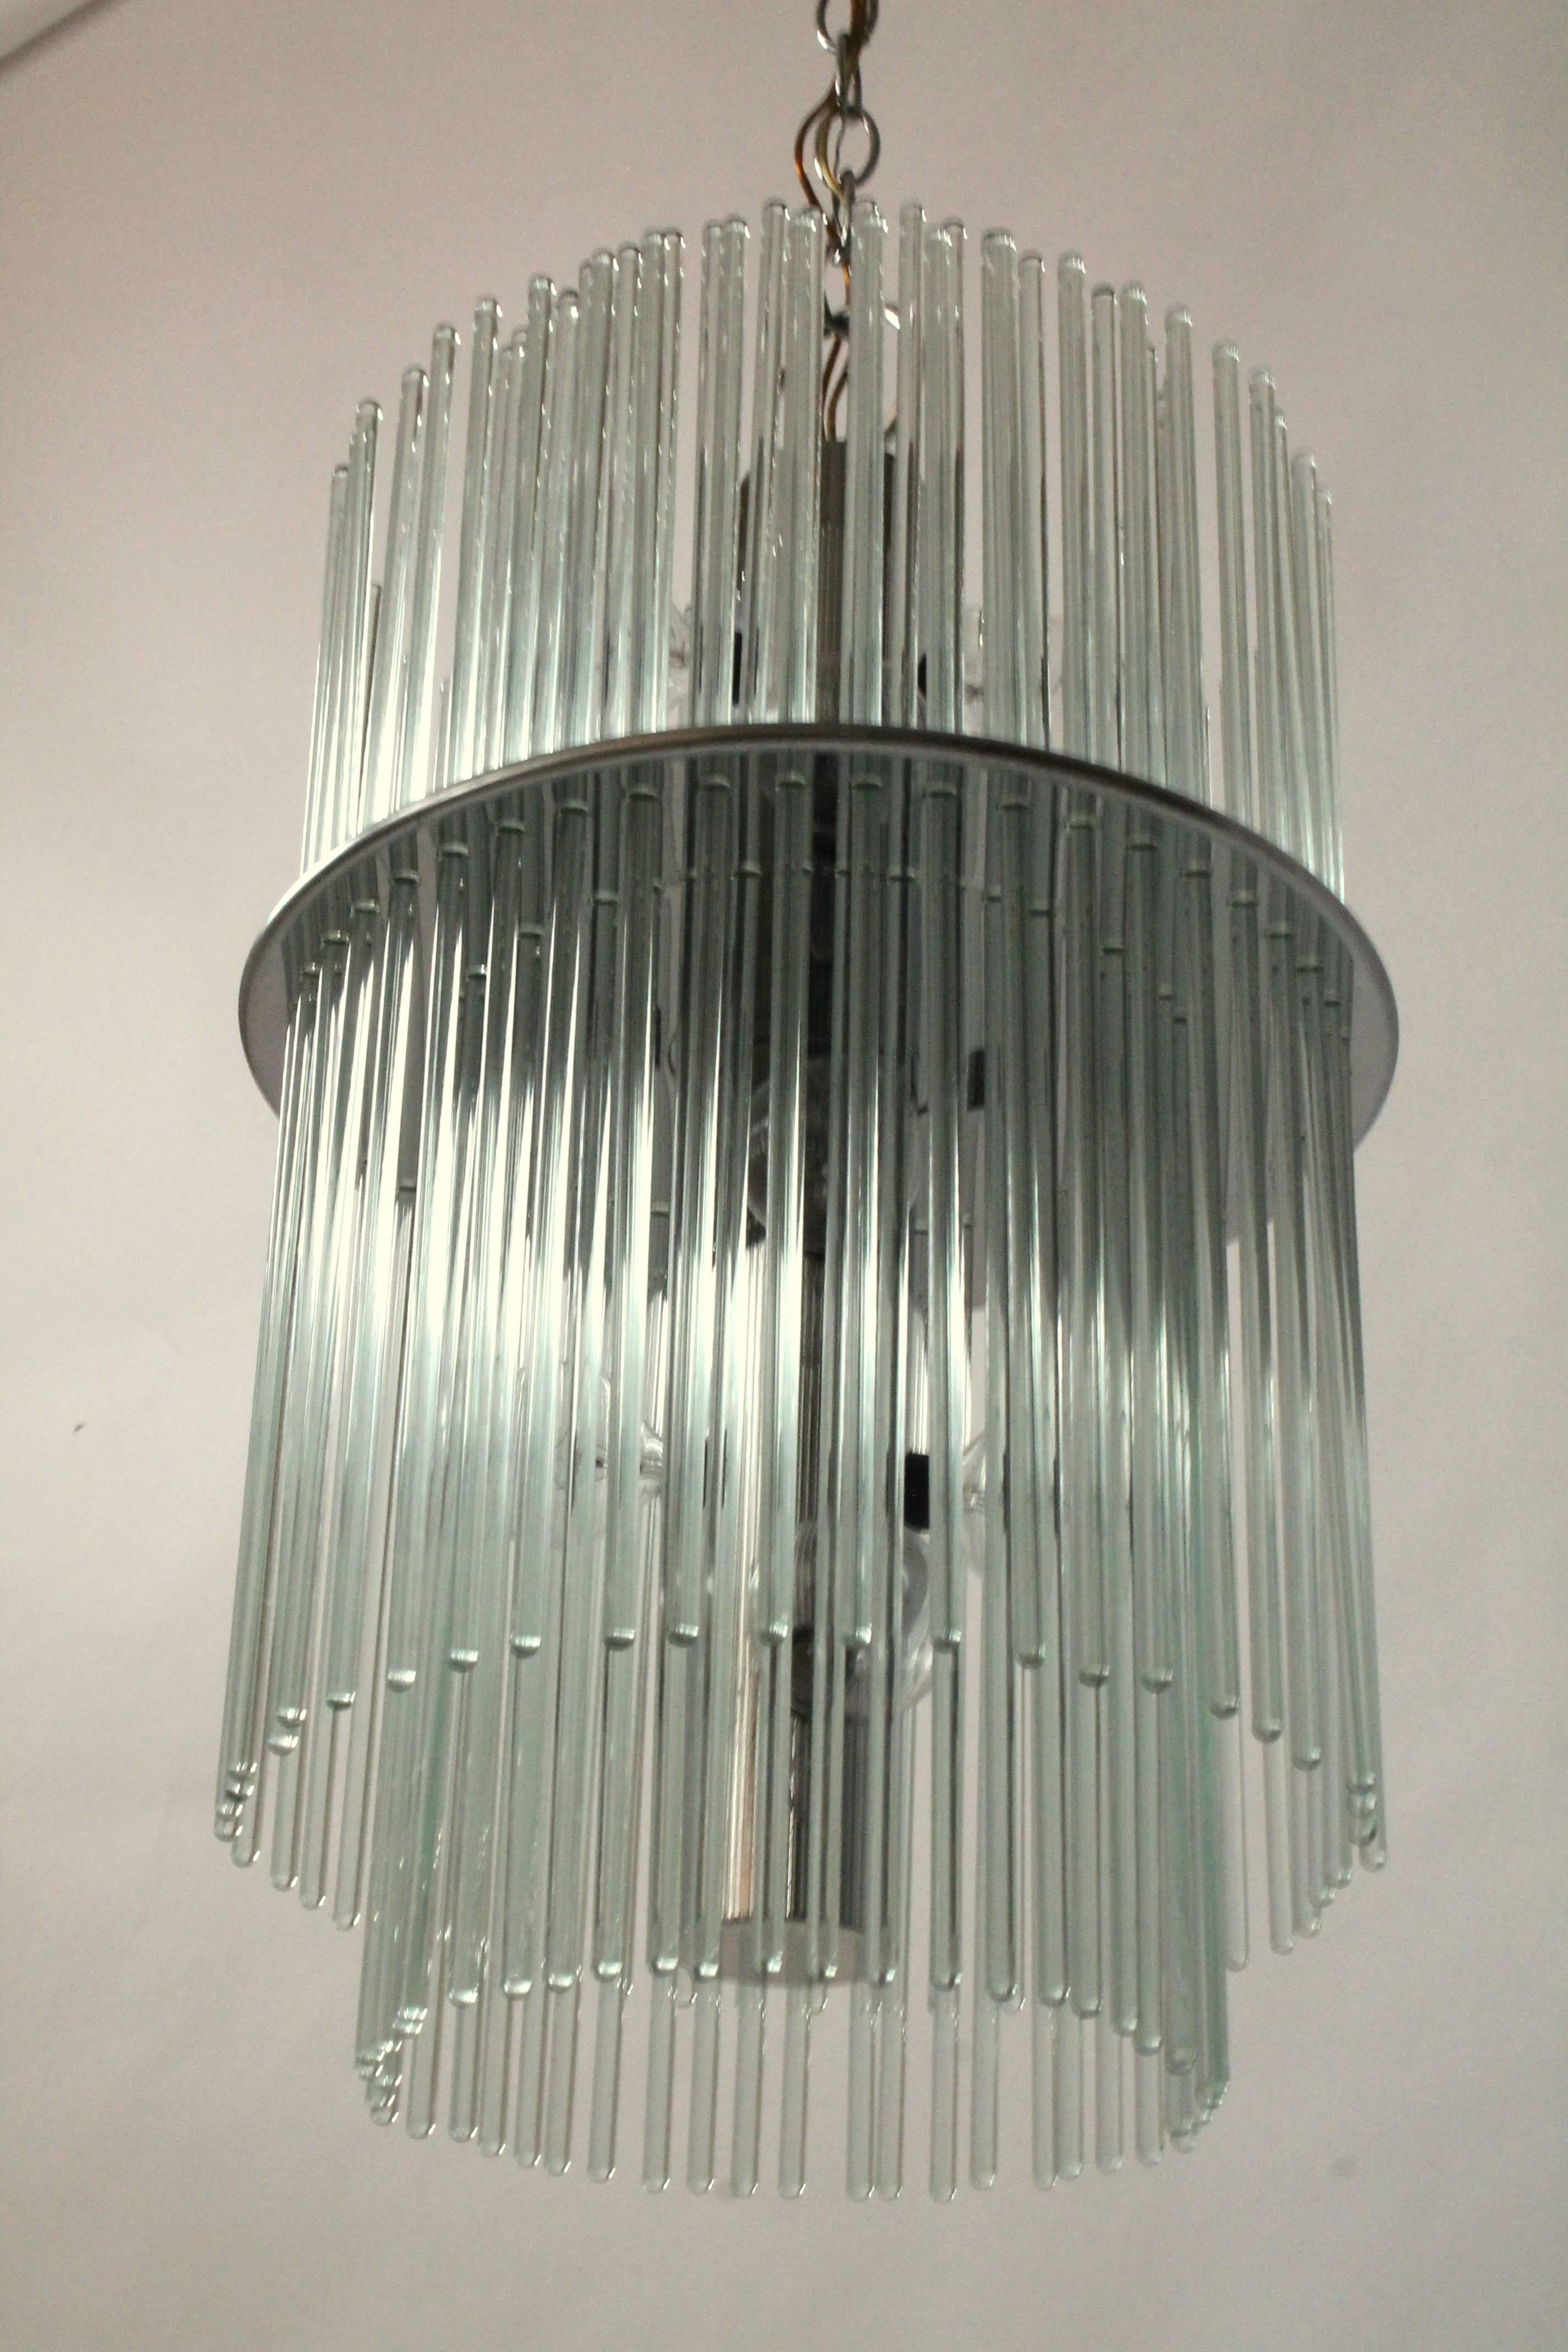 lightolier glass rod chandelier